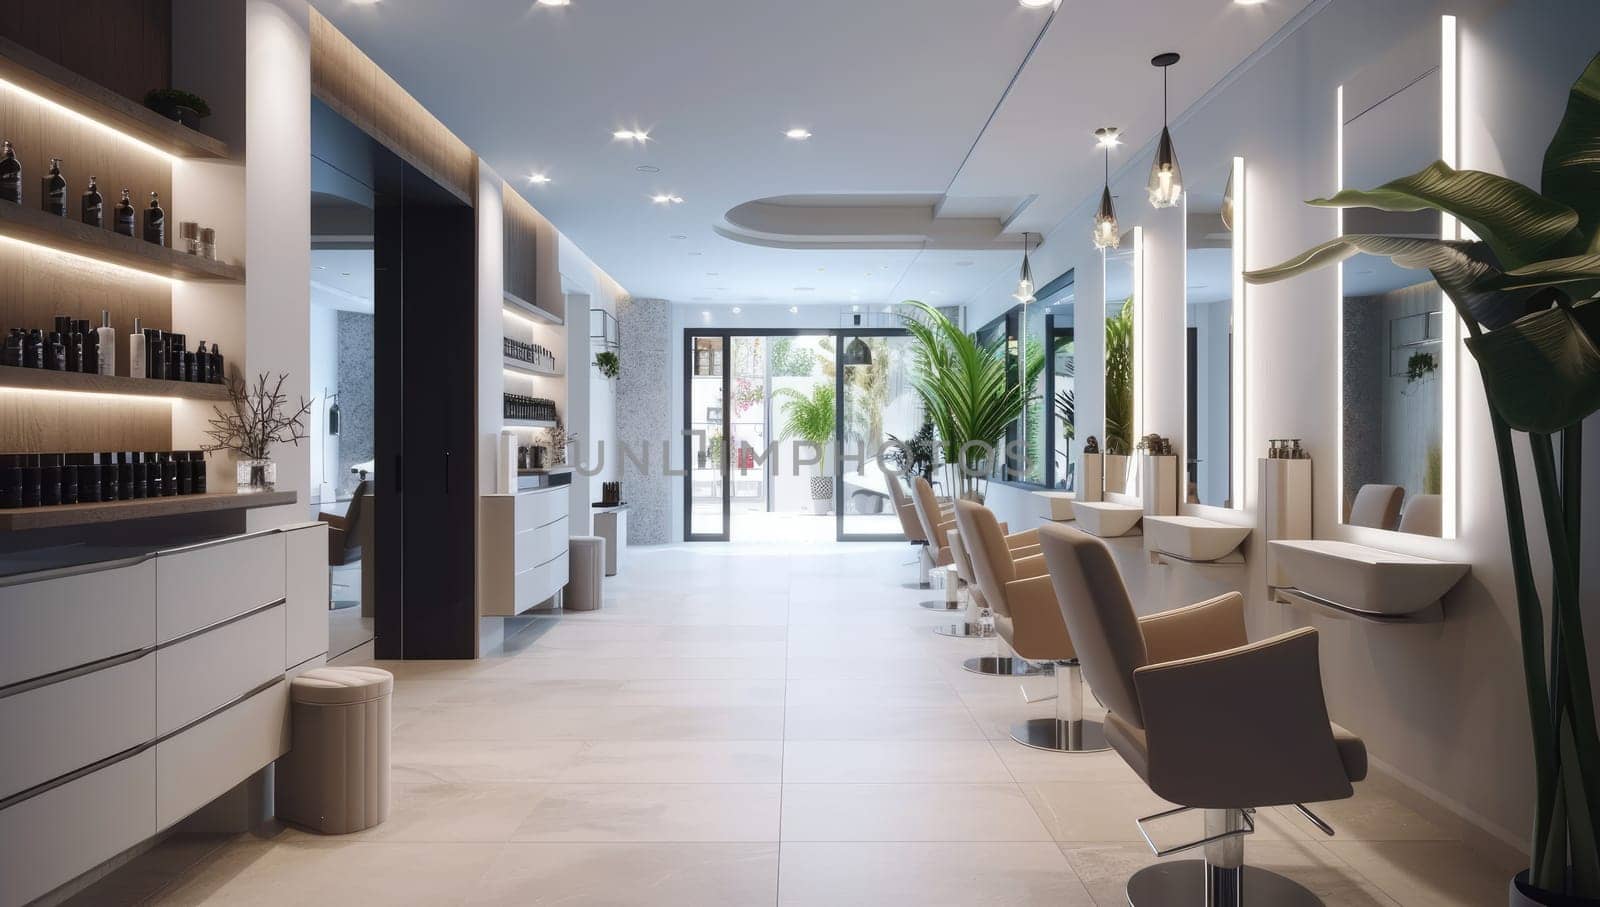 Modern barbershop interior with elegant furniture and lighting